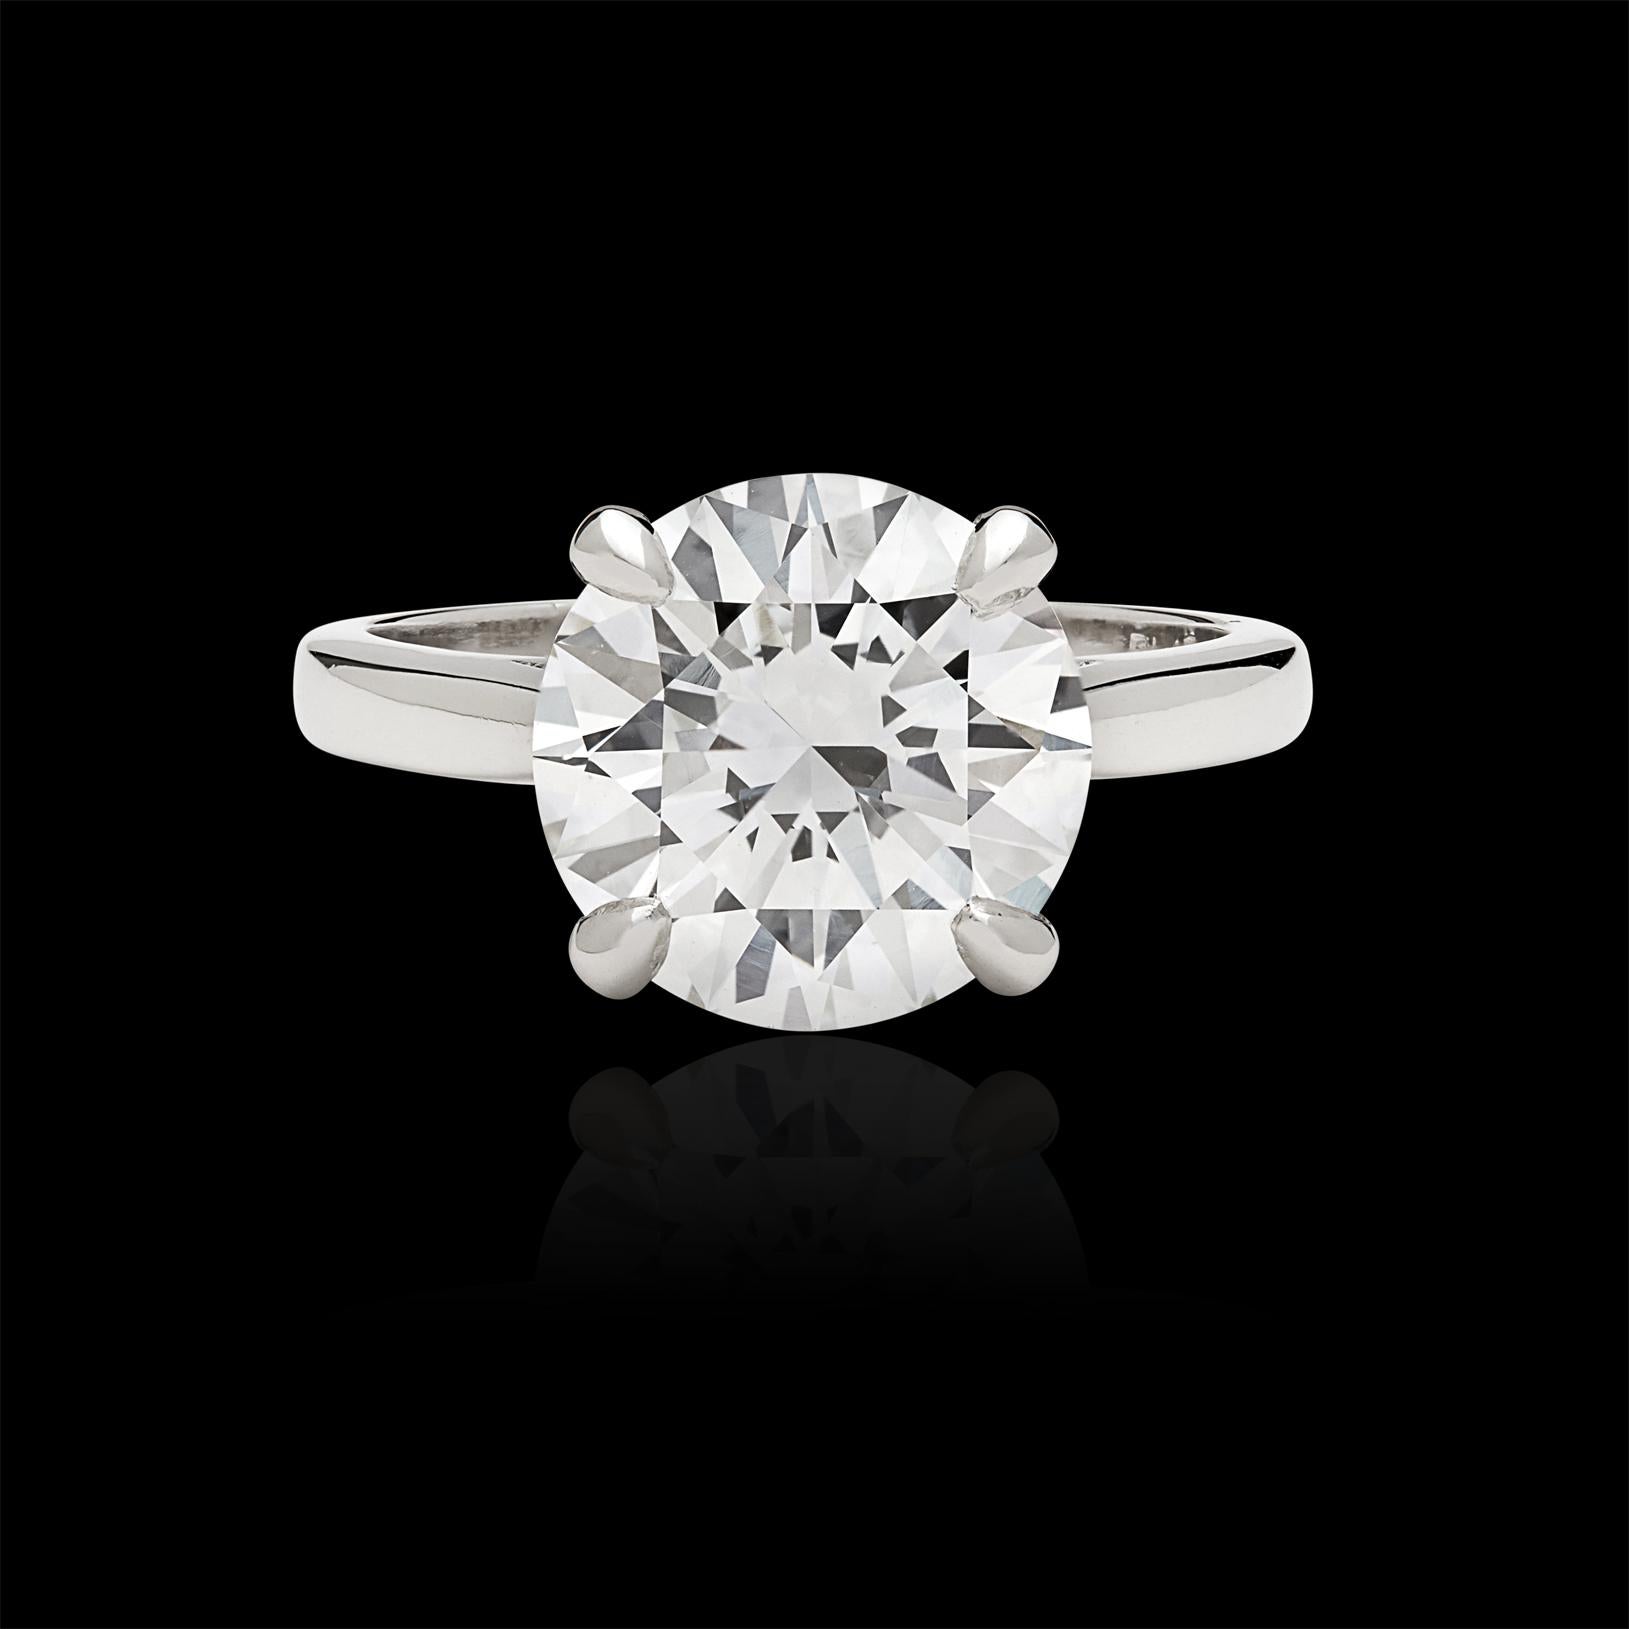 4.07 carat diamond ring